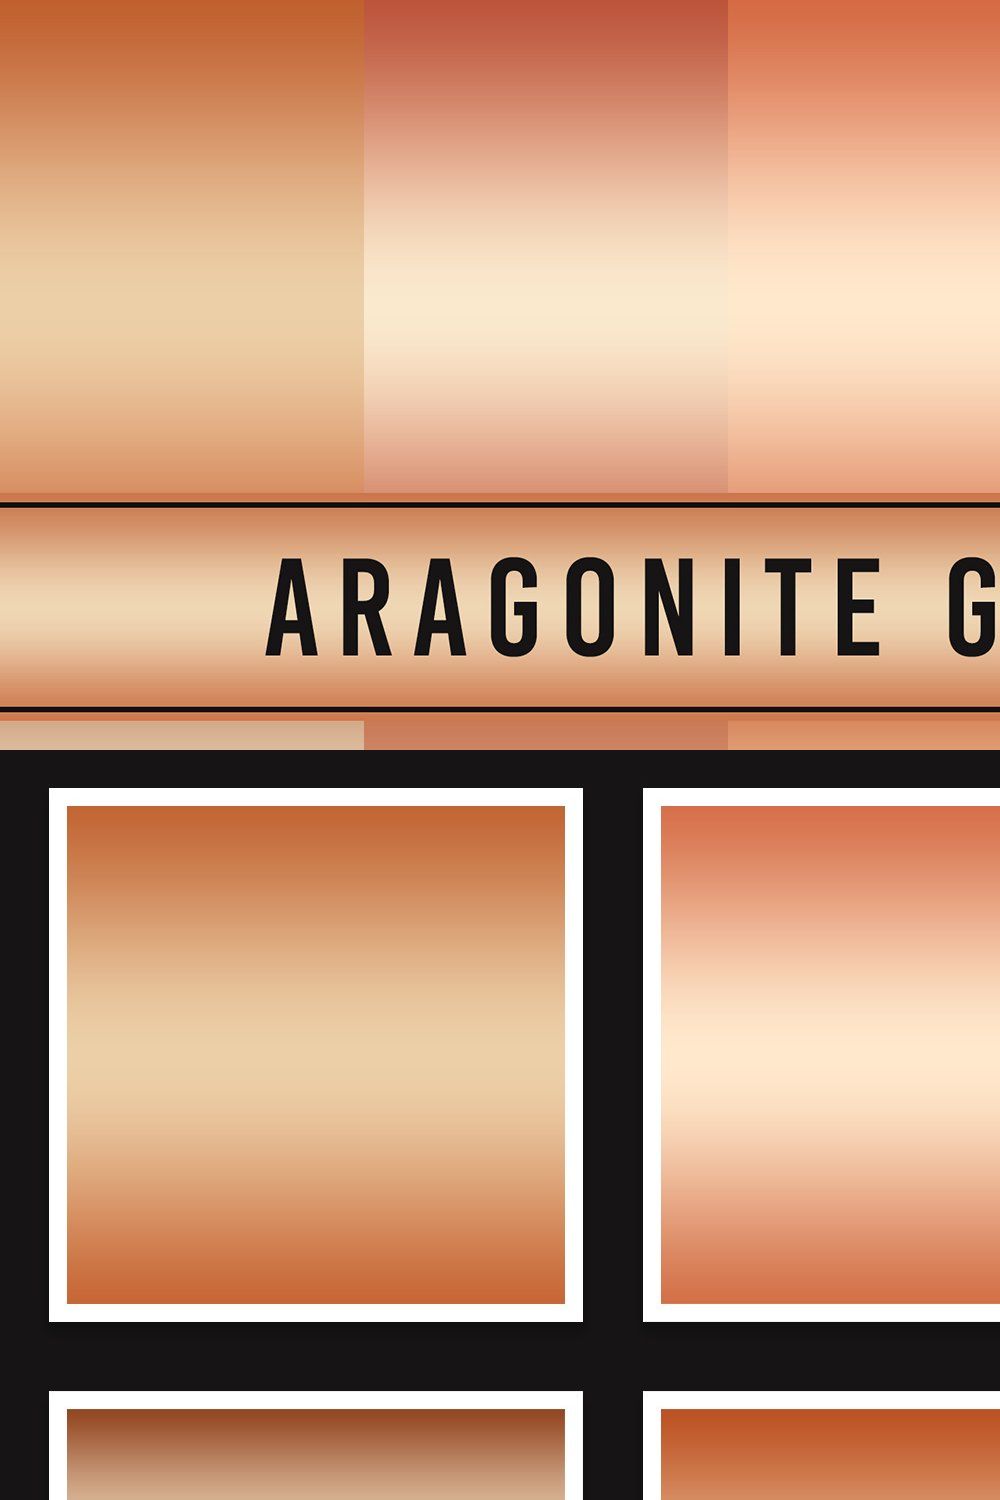 Aragonite Gradients pinterest preview image.